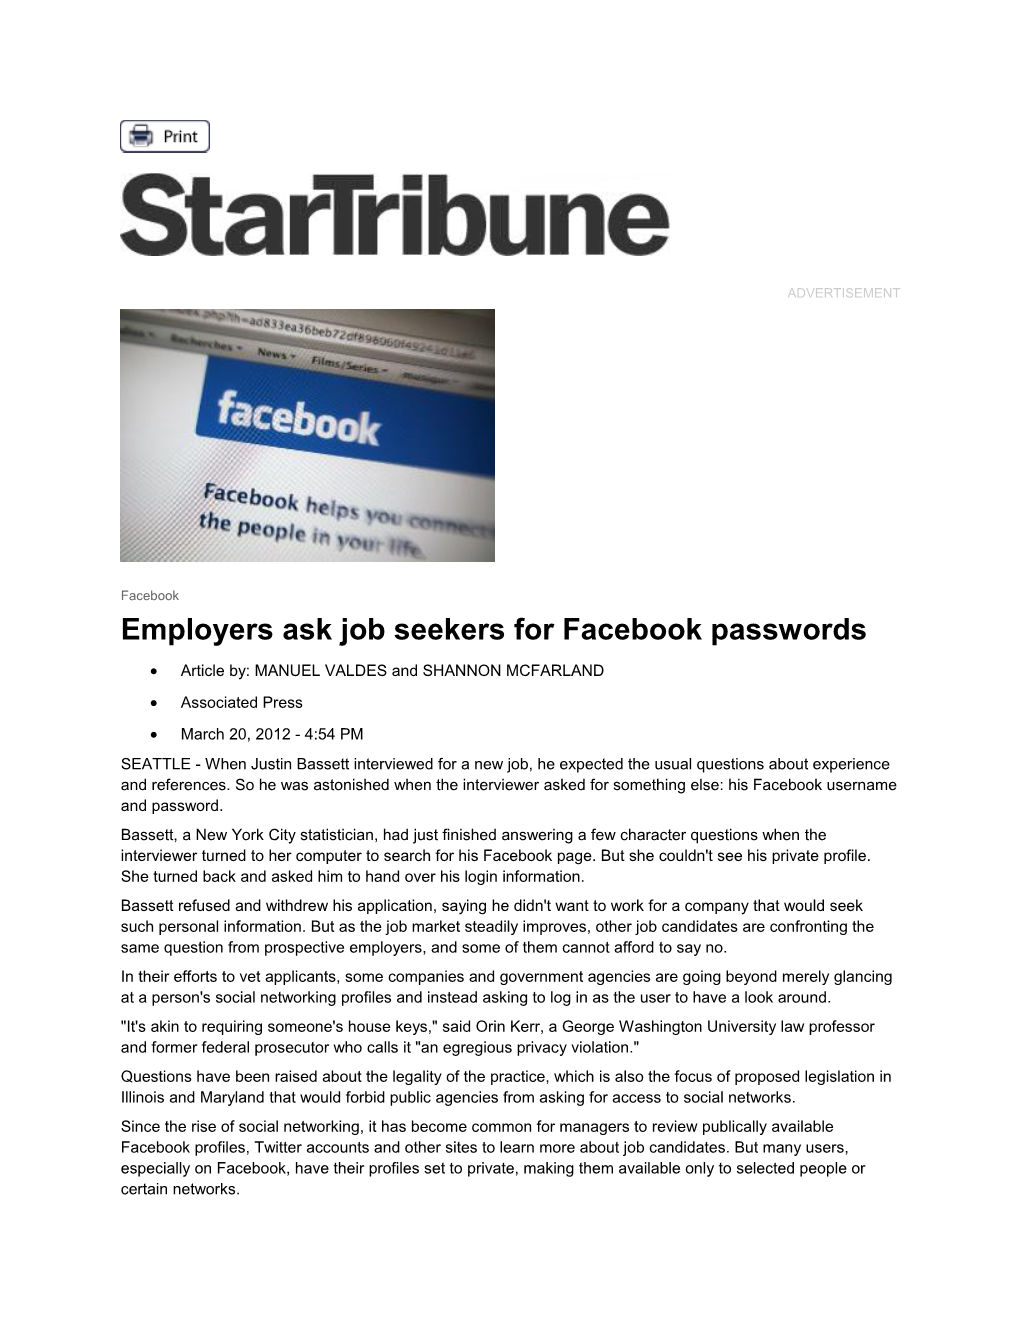 Employers Ask Job Seekers for Facebook Passwords